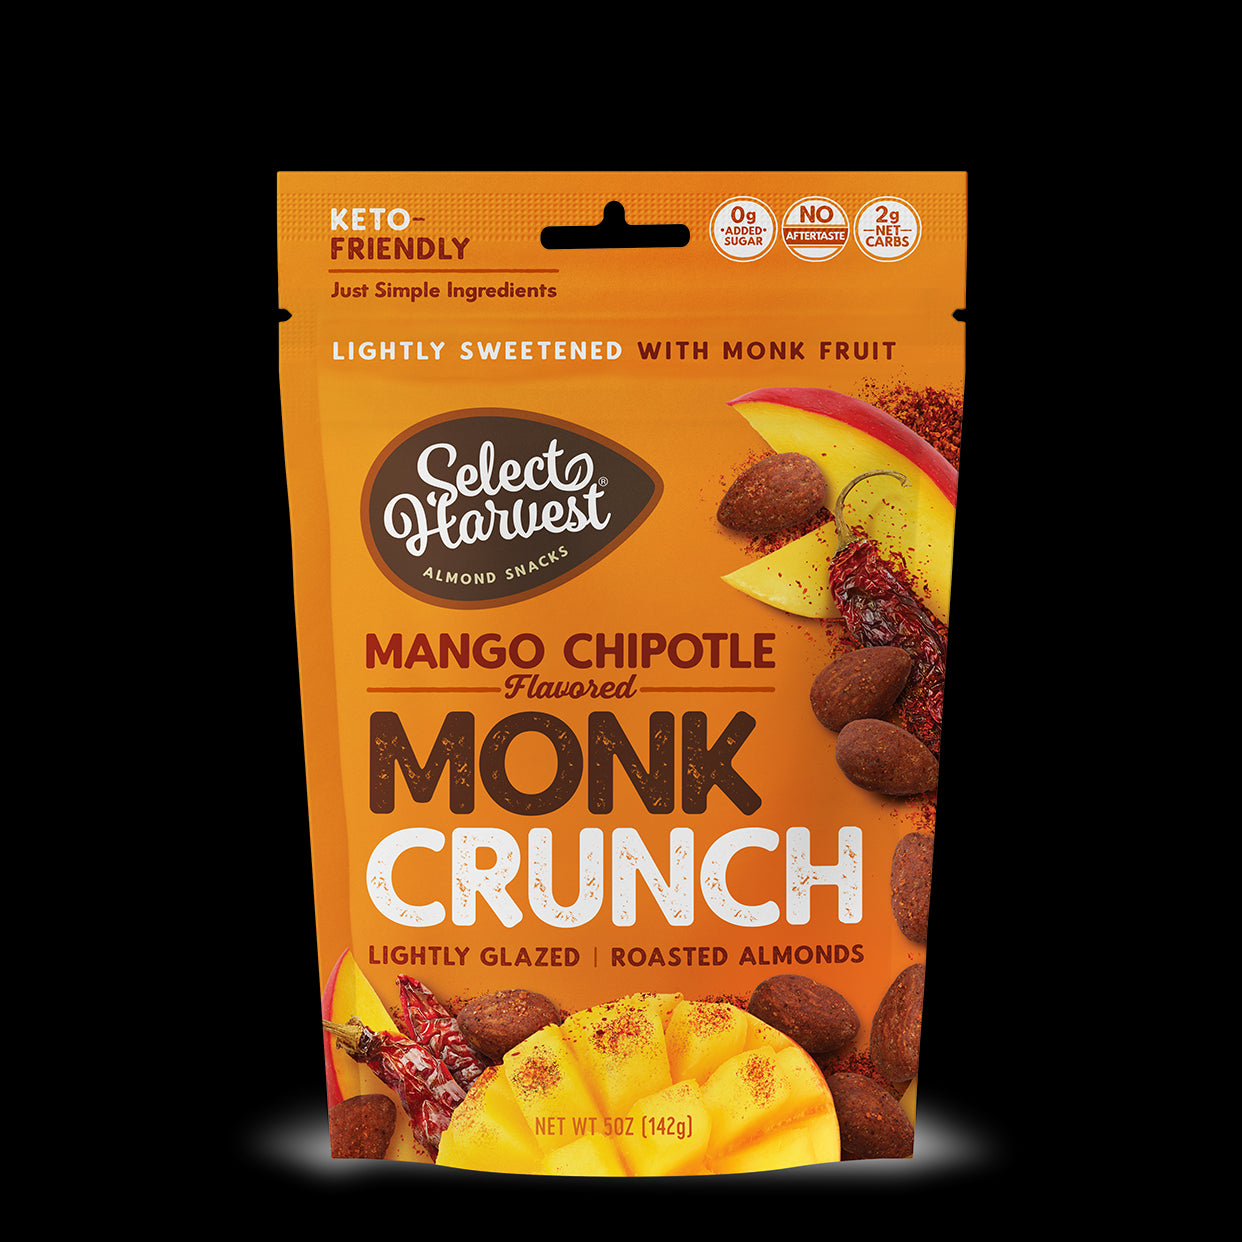 Mango Chipotle Monk Crunch Almonds